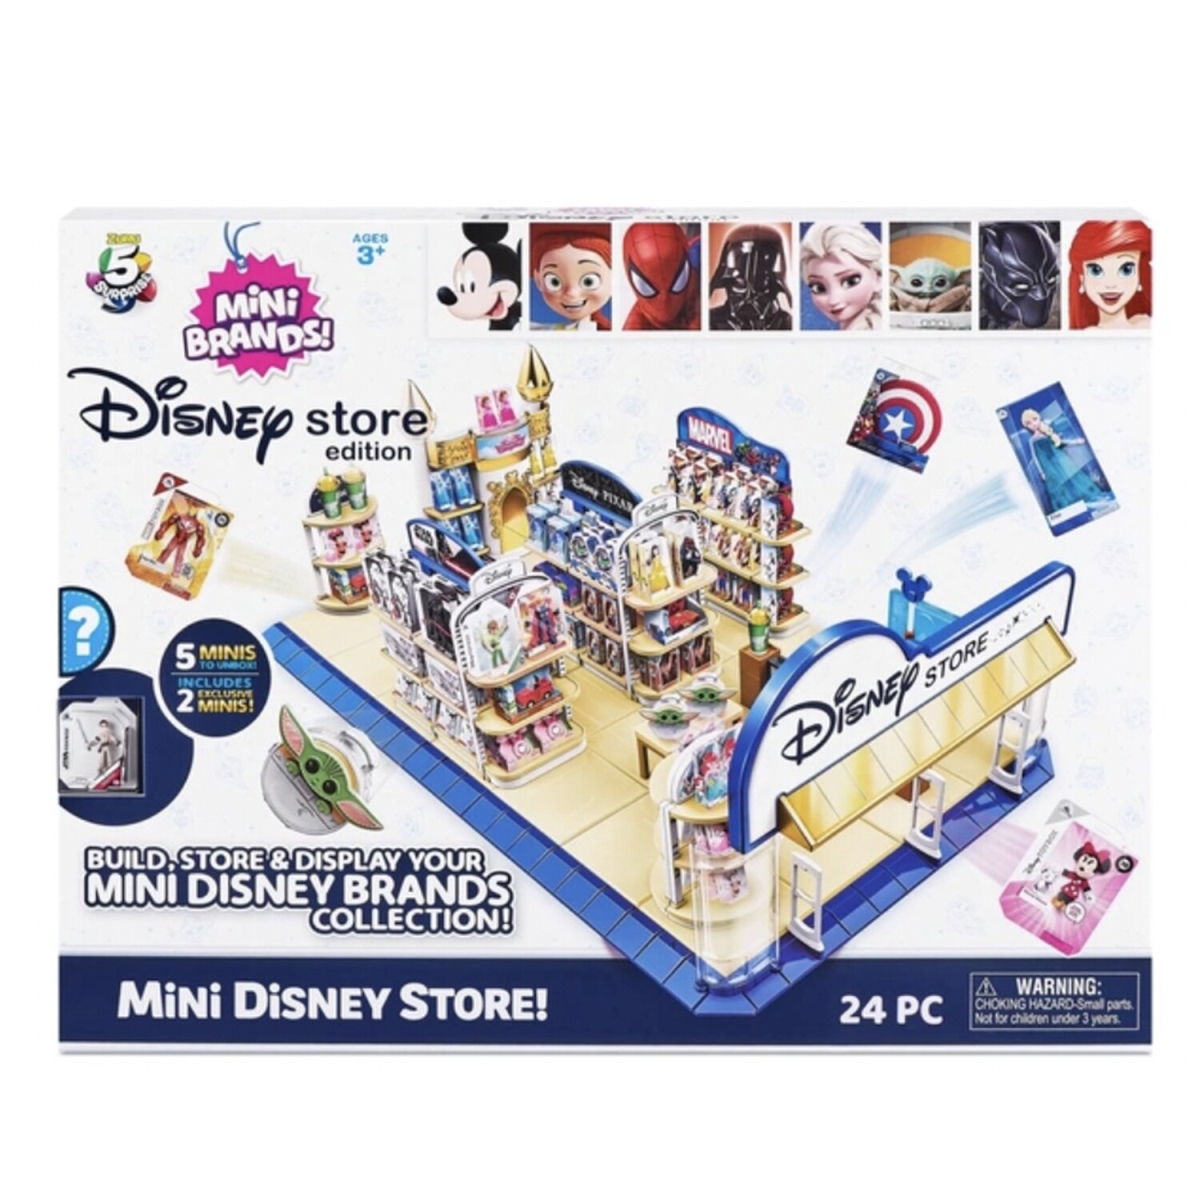 Zuru 304795 35 x 45 x 8 cm 5 Surprise Mini Brands Series 1 Disney Store Playset